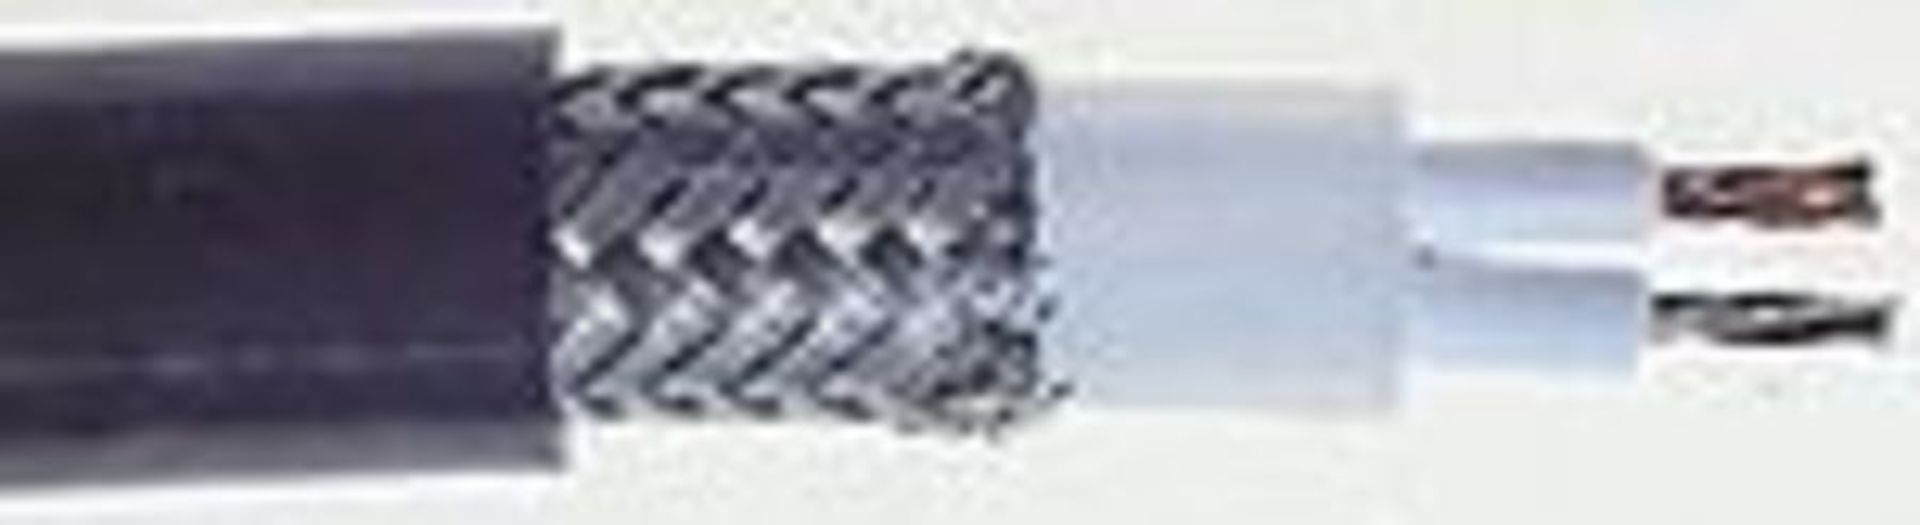 DRAKA Grey Twinaxial Cable 100m Reel